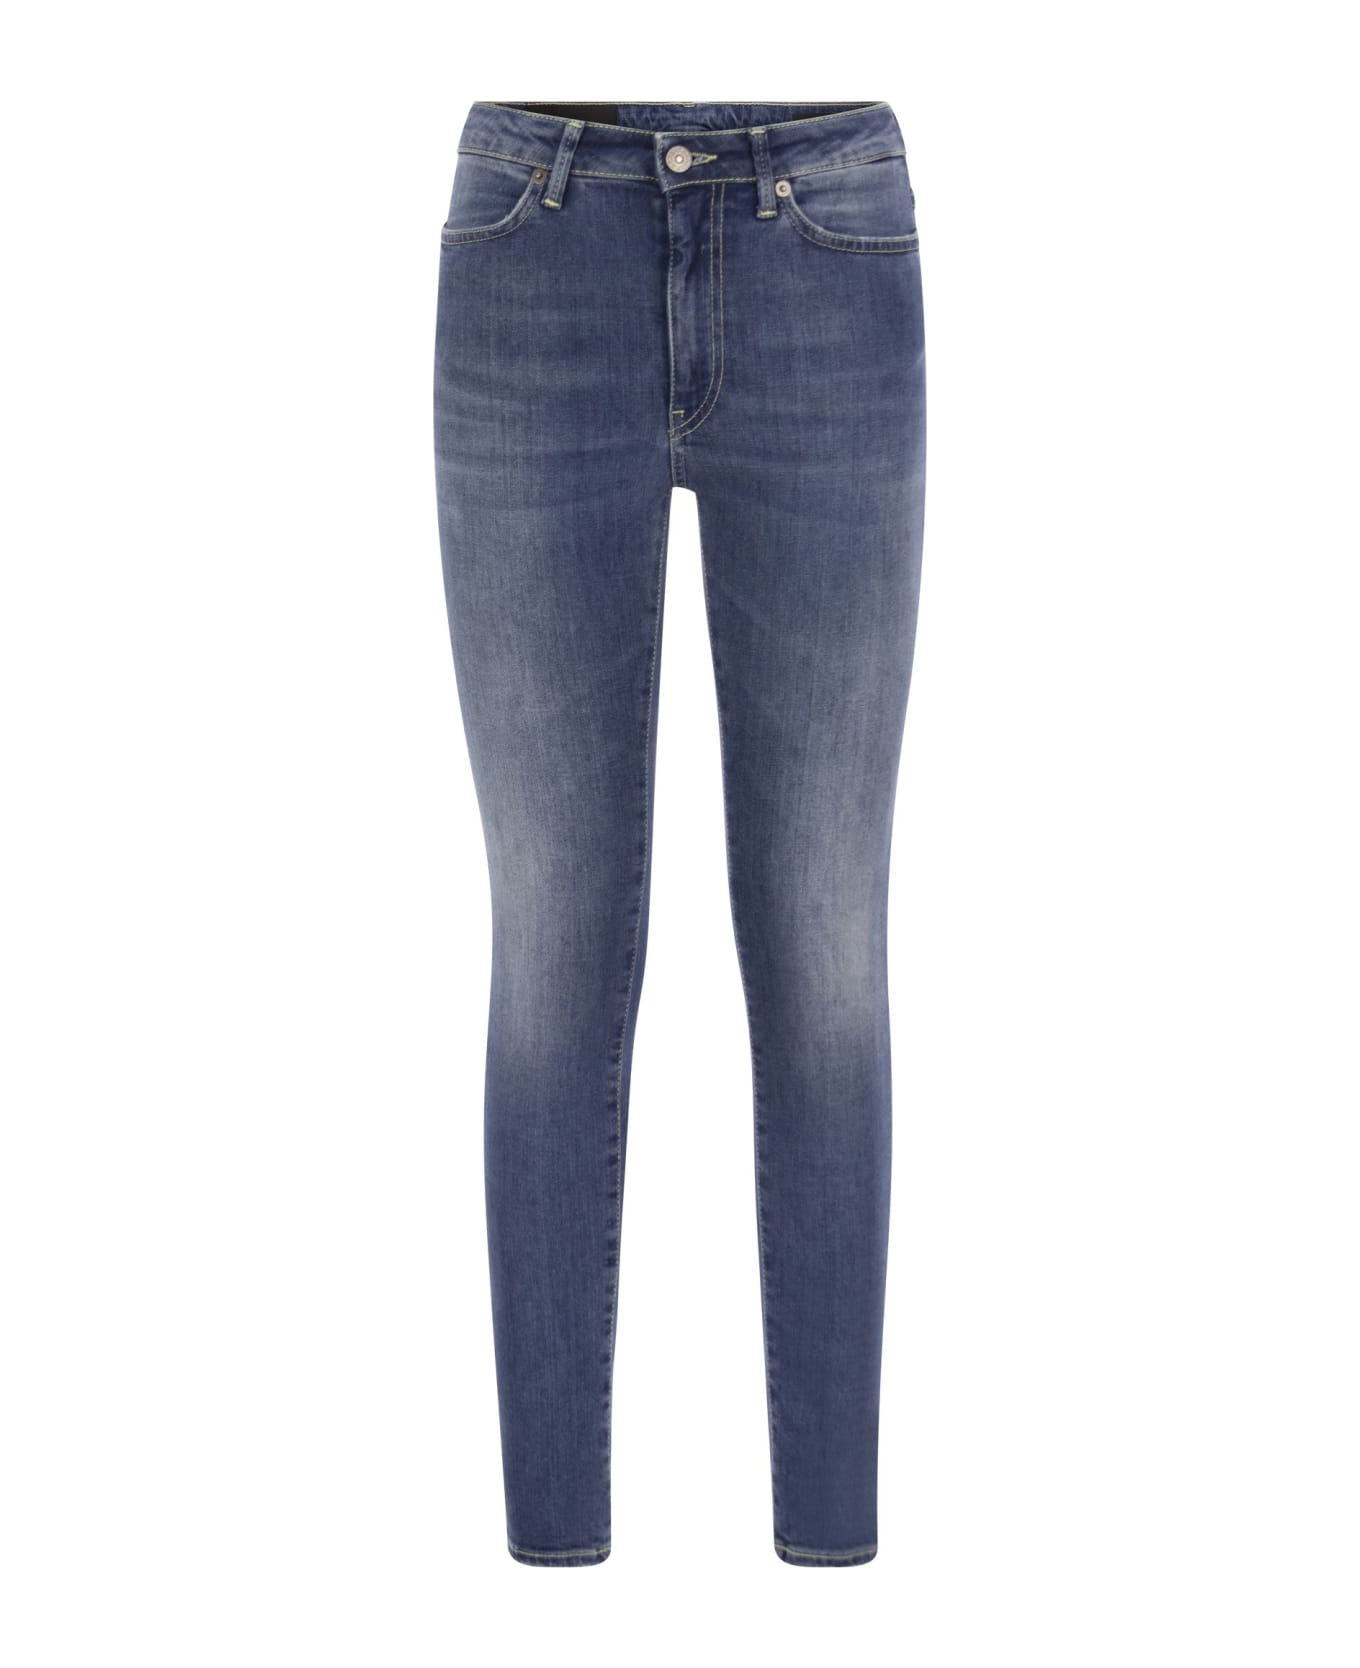 Dondup Iris - Jeans Skinny Fit - Denim Blue